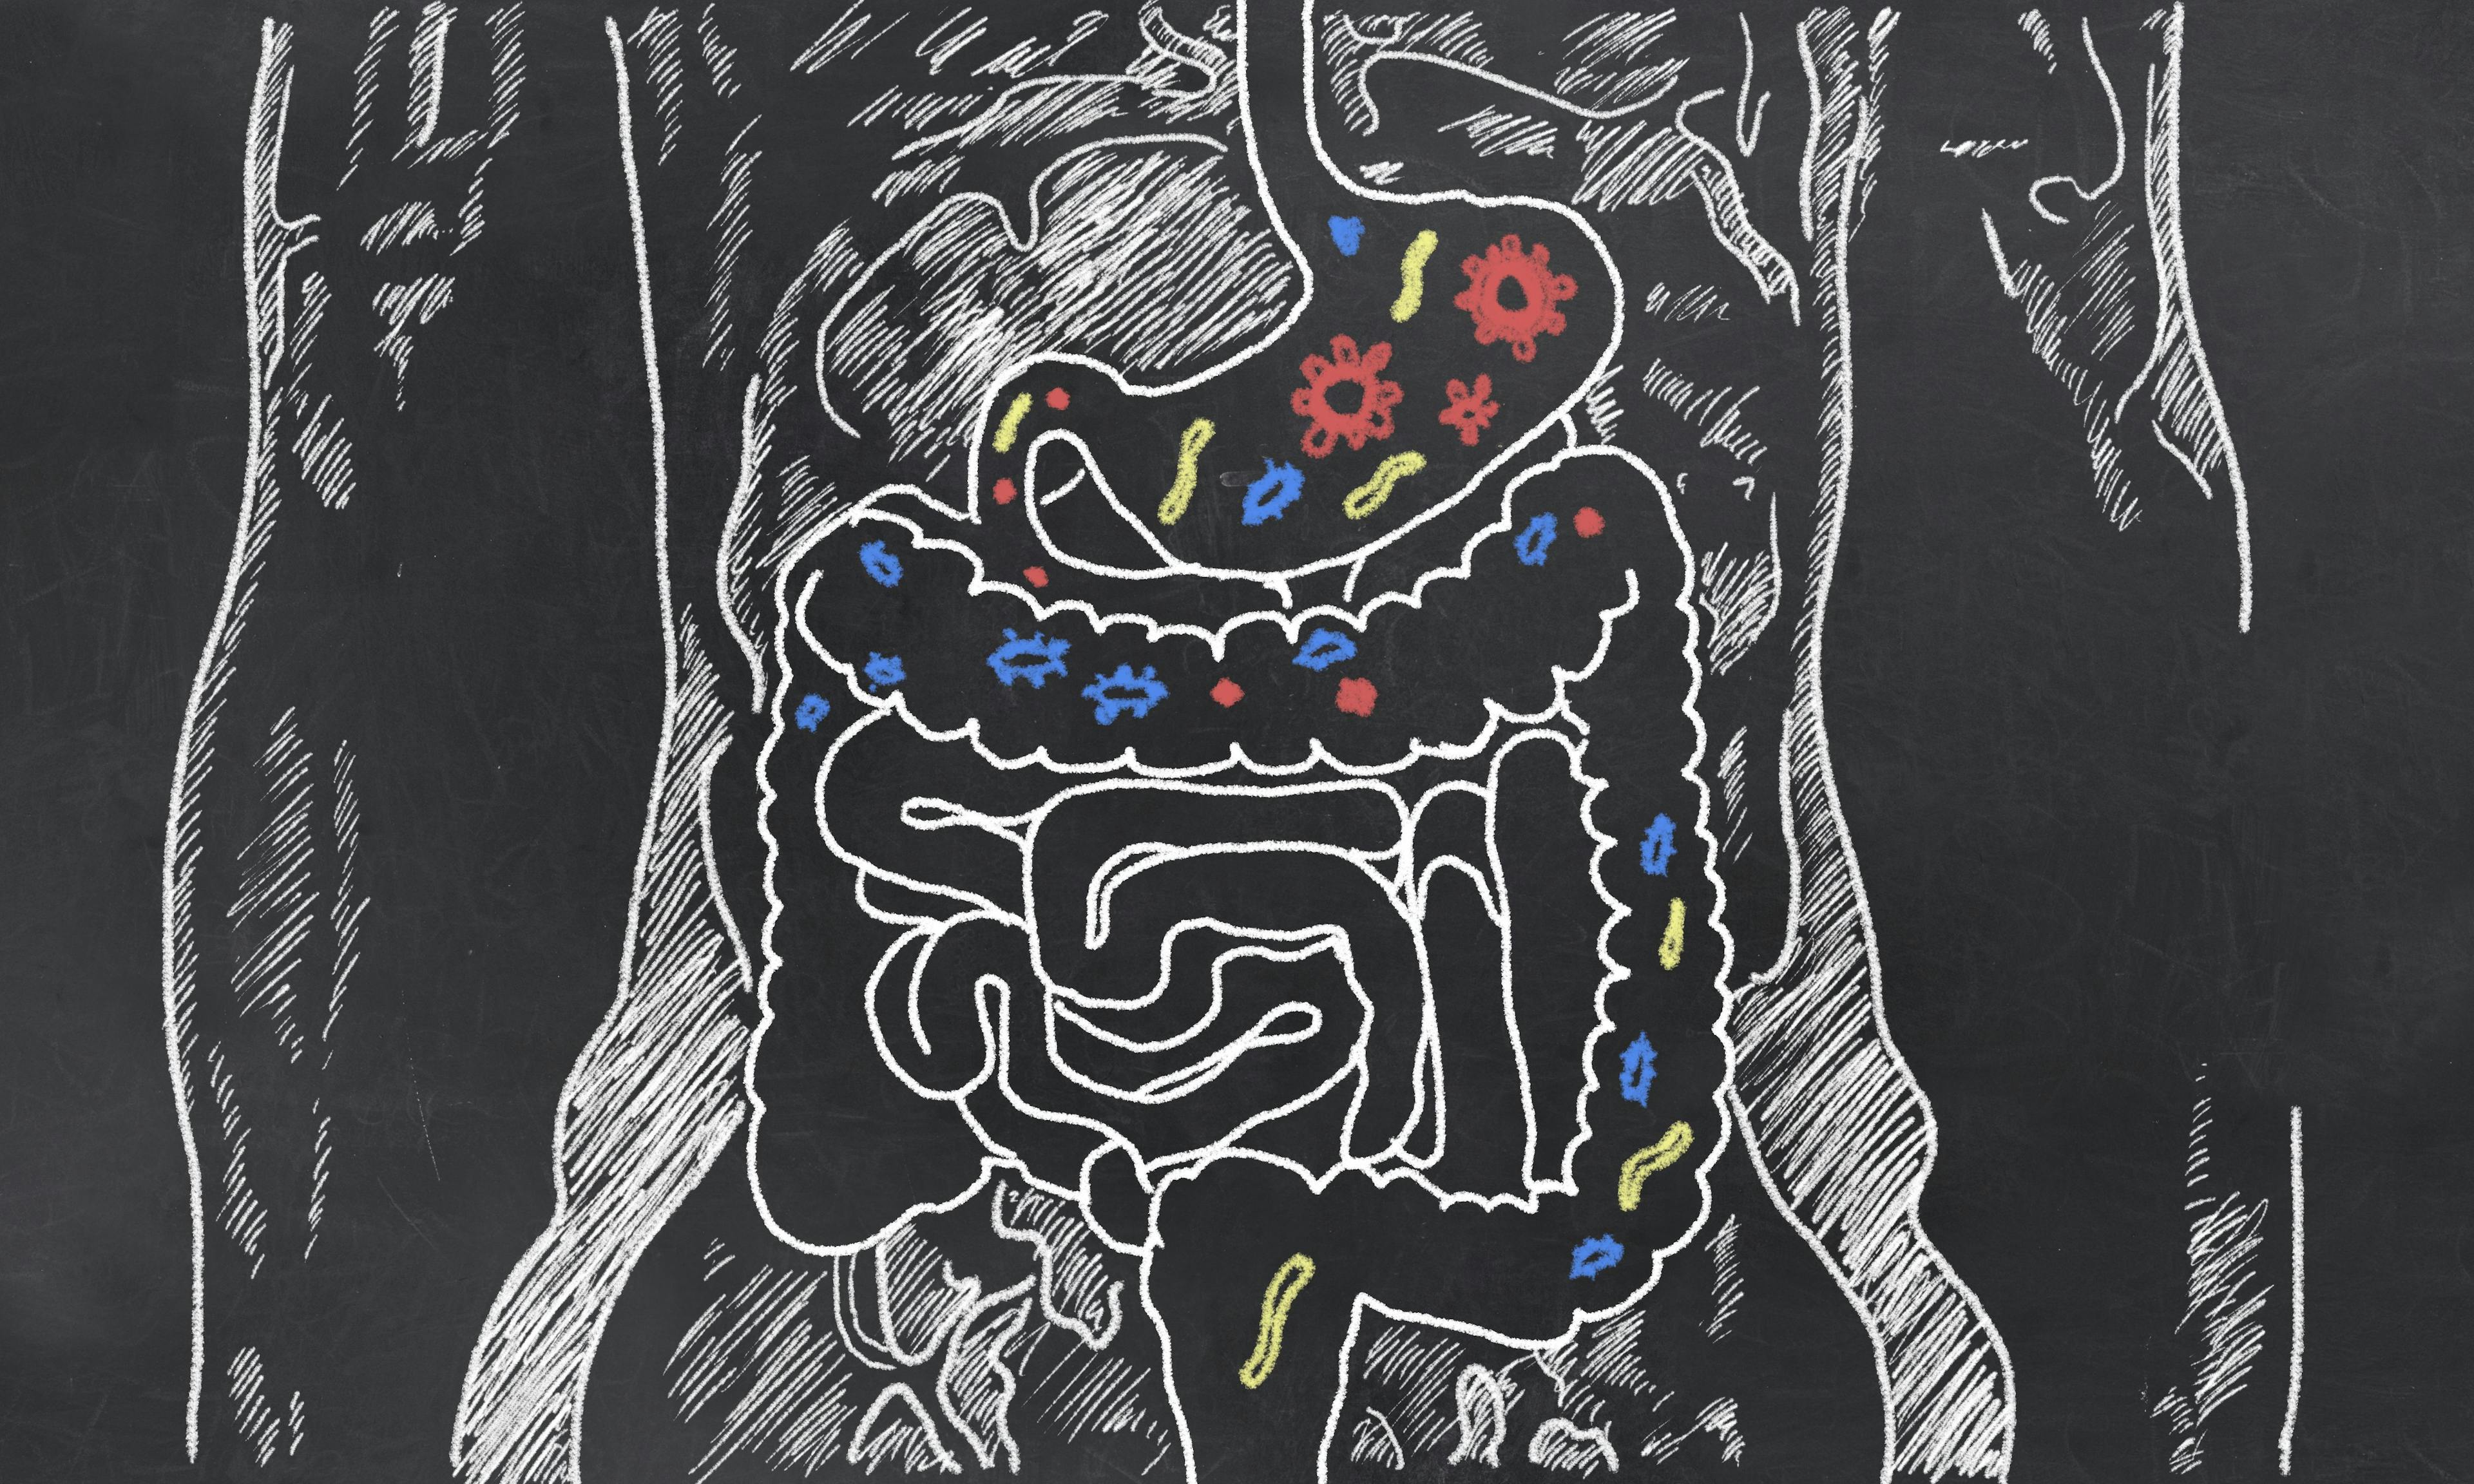 Depletion of gut bacteria identified in ankylosing spondylitis